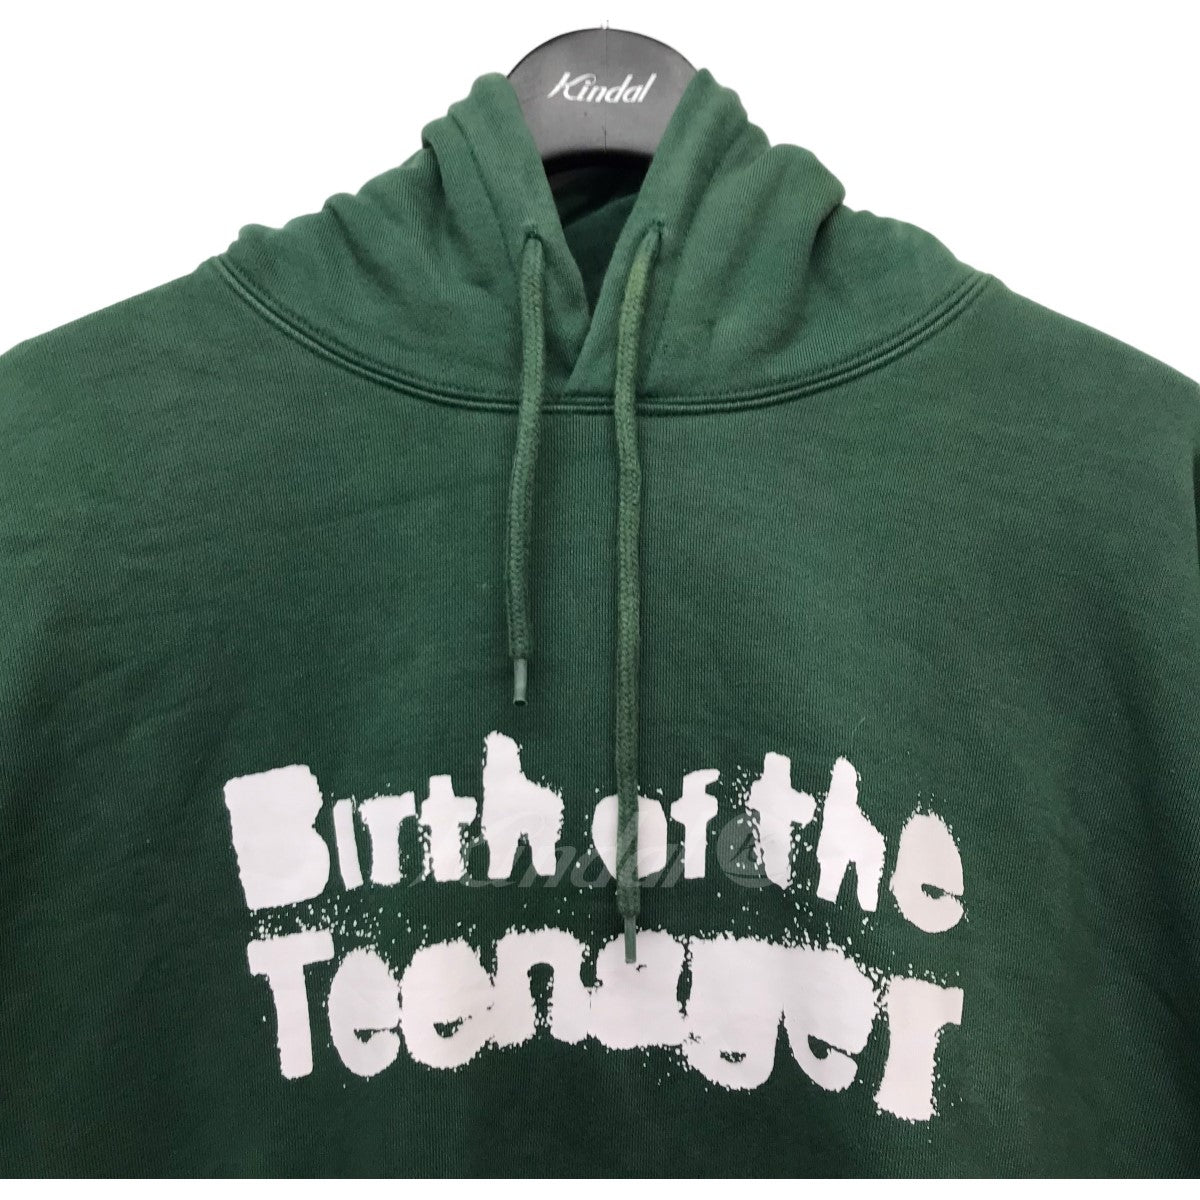 BoTT(ボット) 「Birth The Teenager Hoodie」プリントプルオーバー 